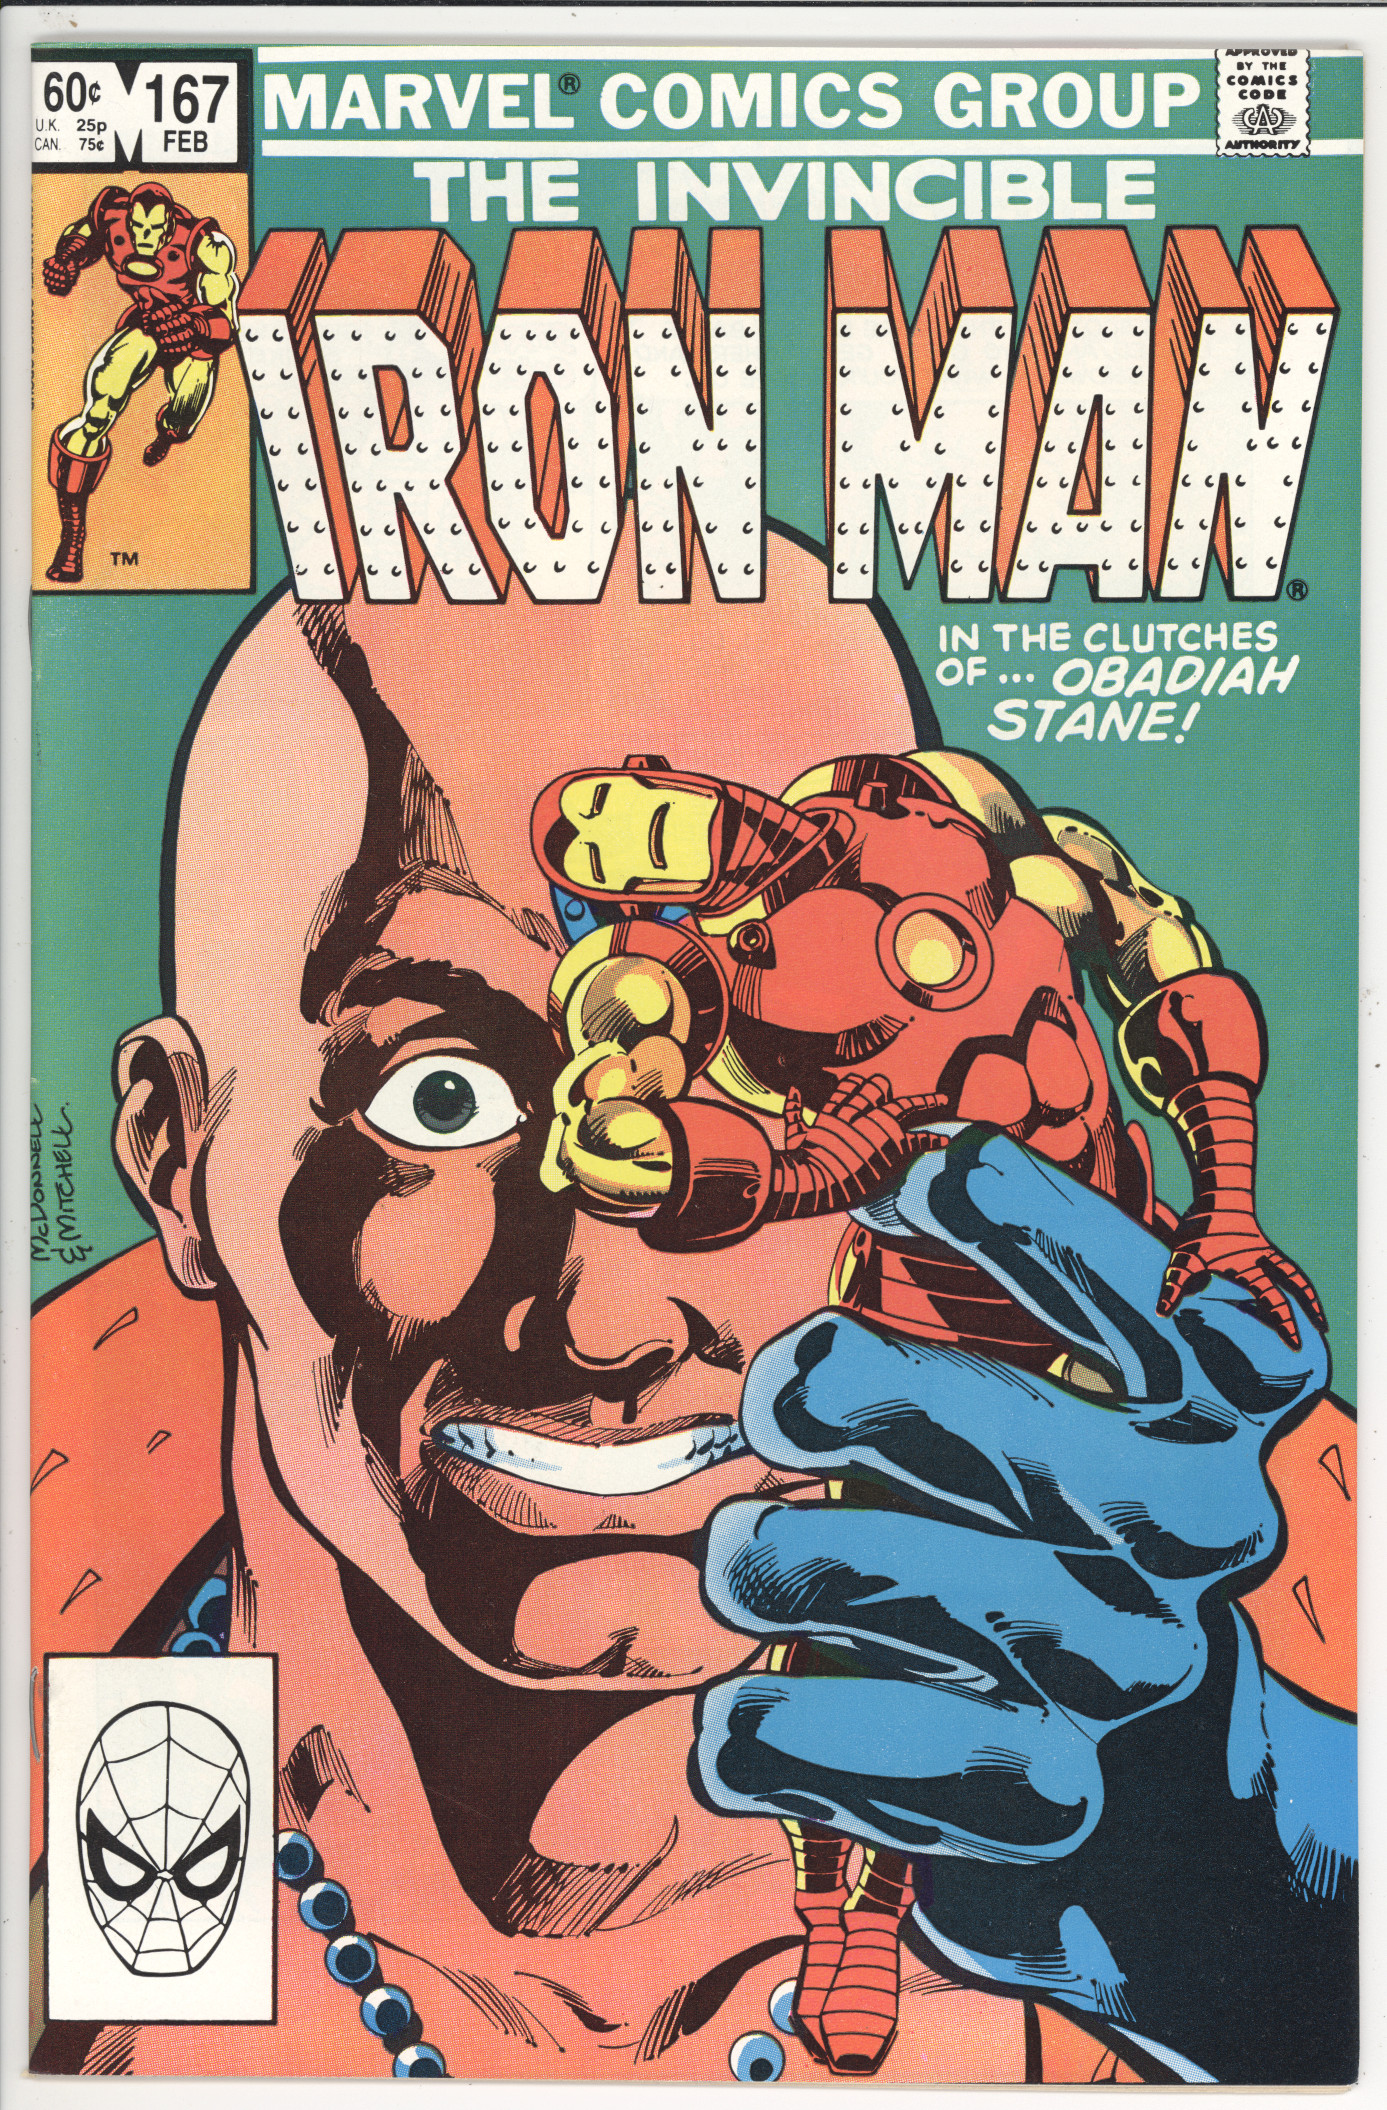 Iron Man #167